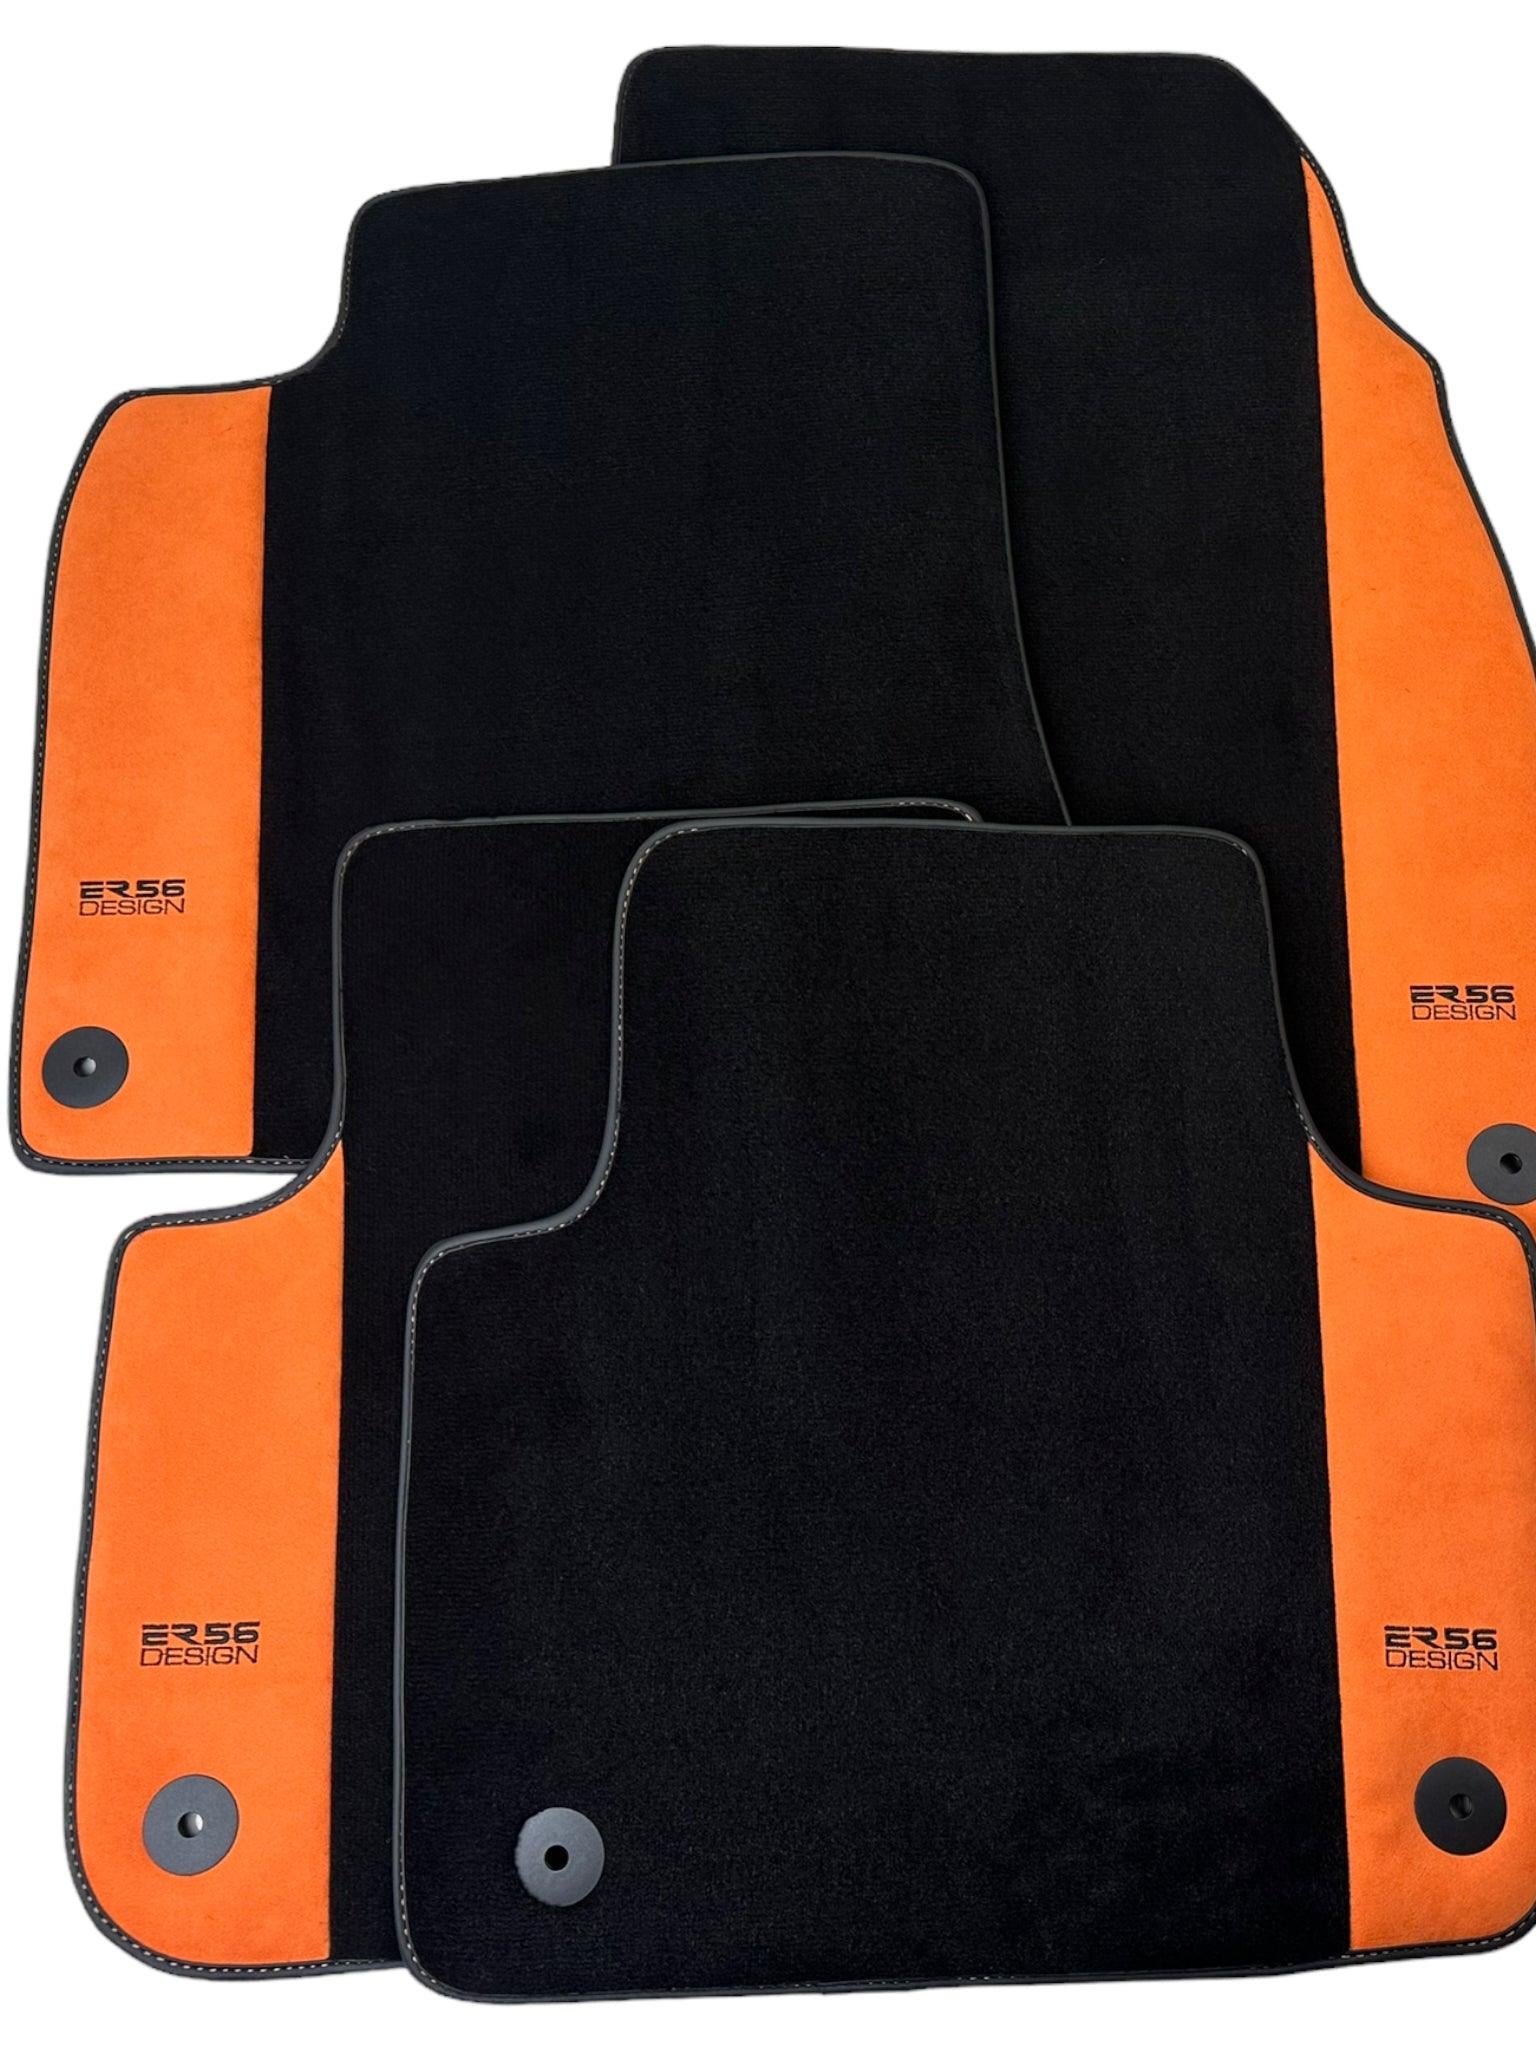 Black Floor Mats for Porsche Cayenne (2003-2010) with Orange Alcantara Leather ER56 Design